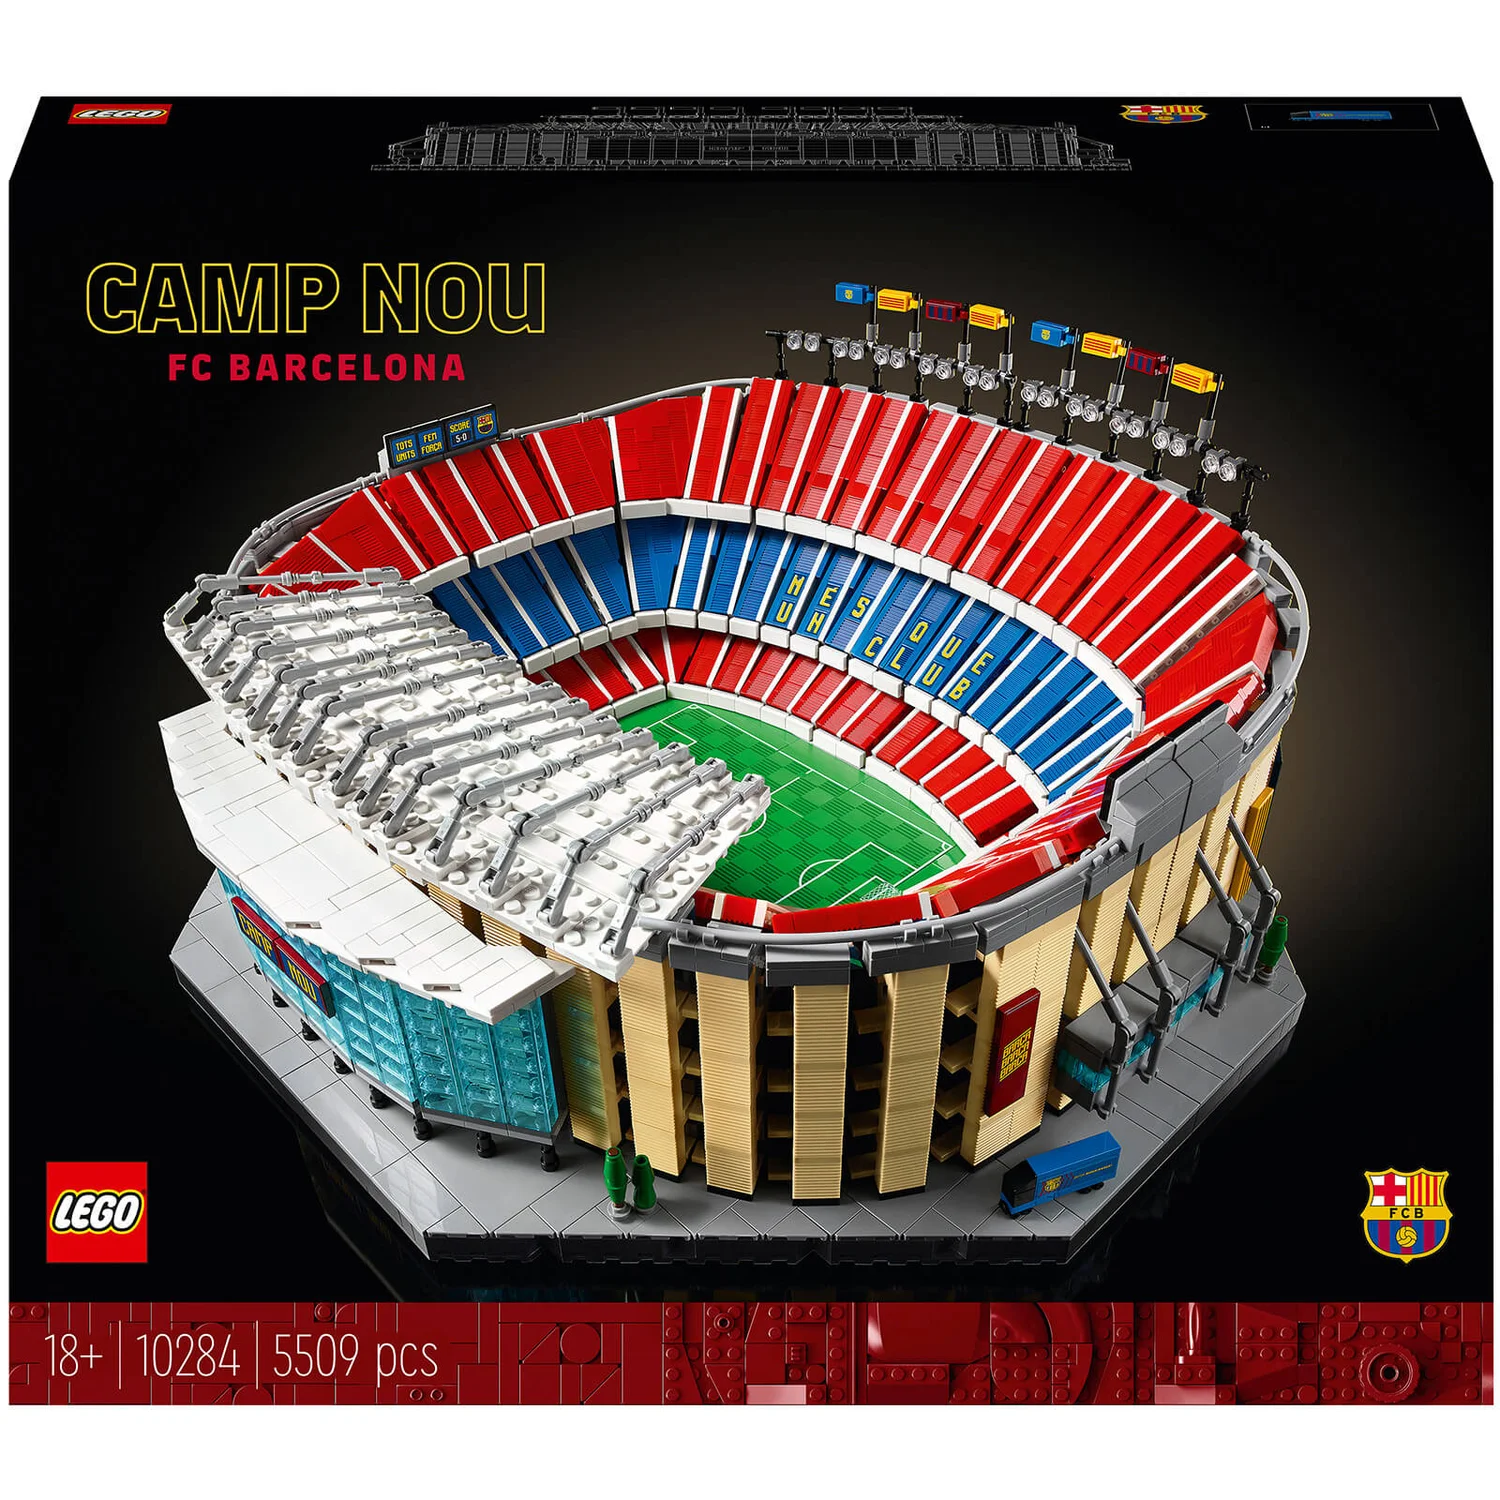 5509-Piece LEGO Camp Nou FC Barcelona Football Set